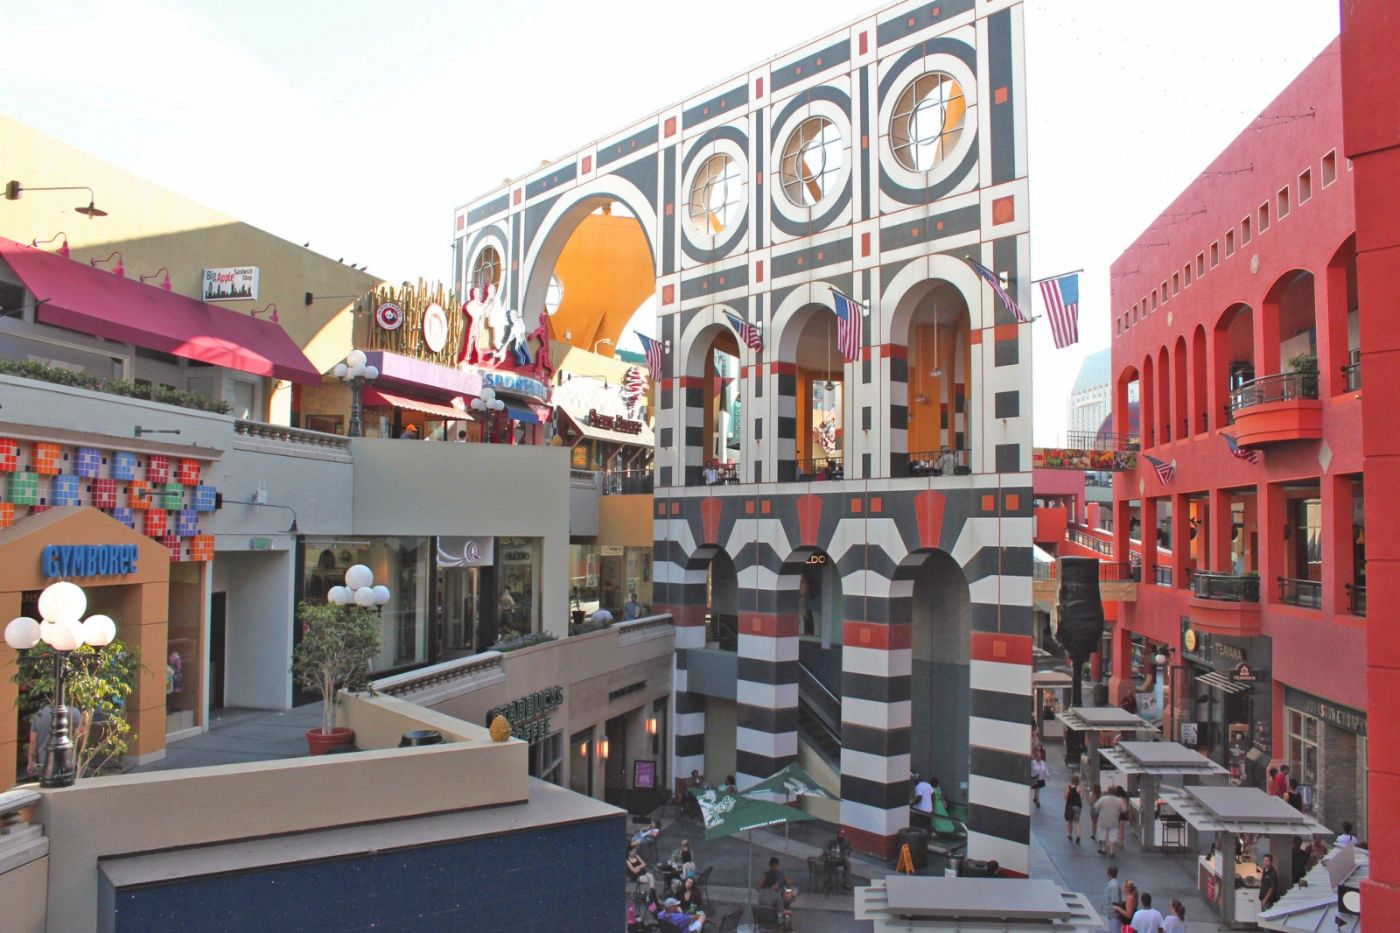 Horton Plaza Mall - From Architecture Icon to Dead Mall